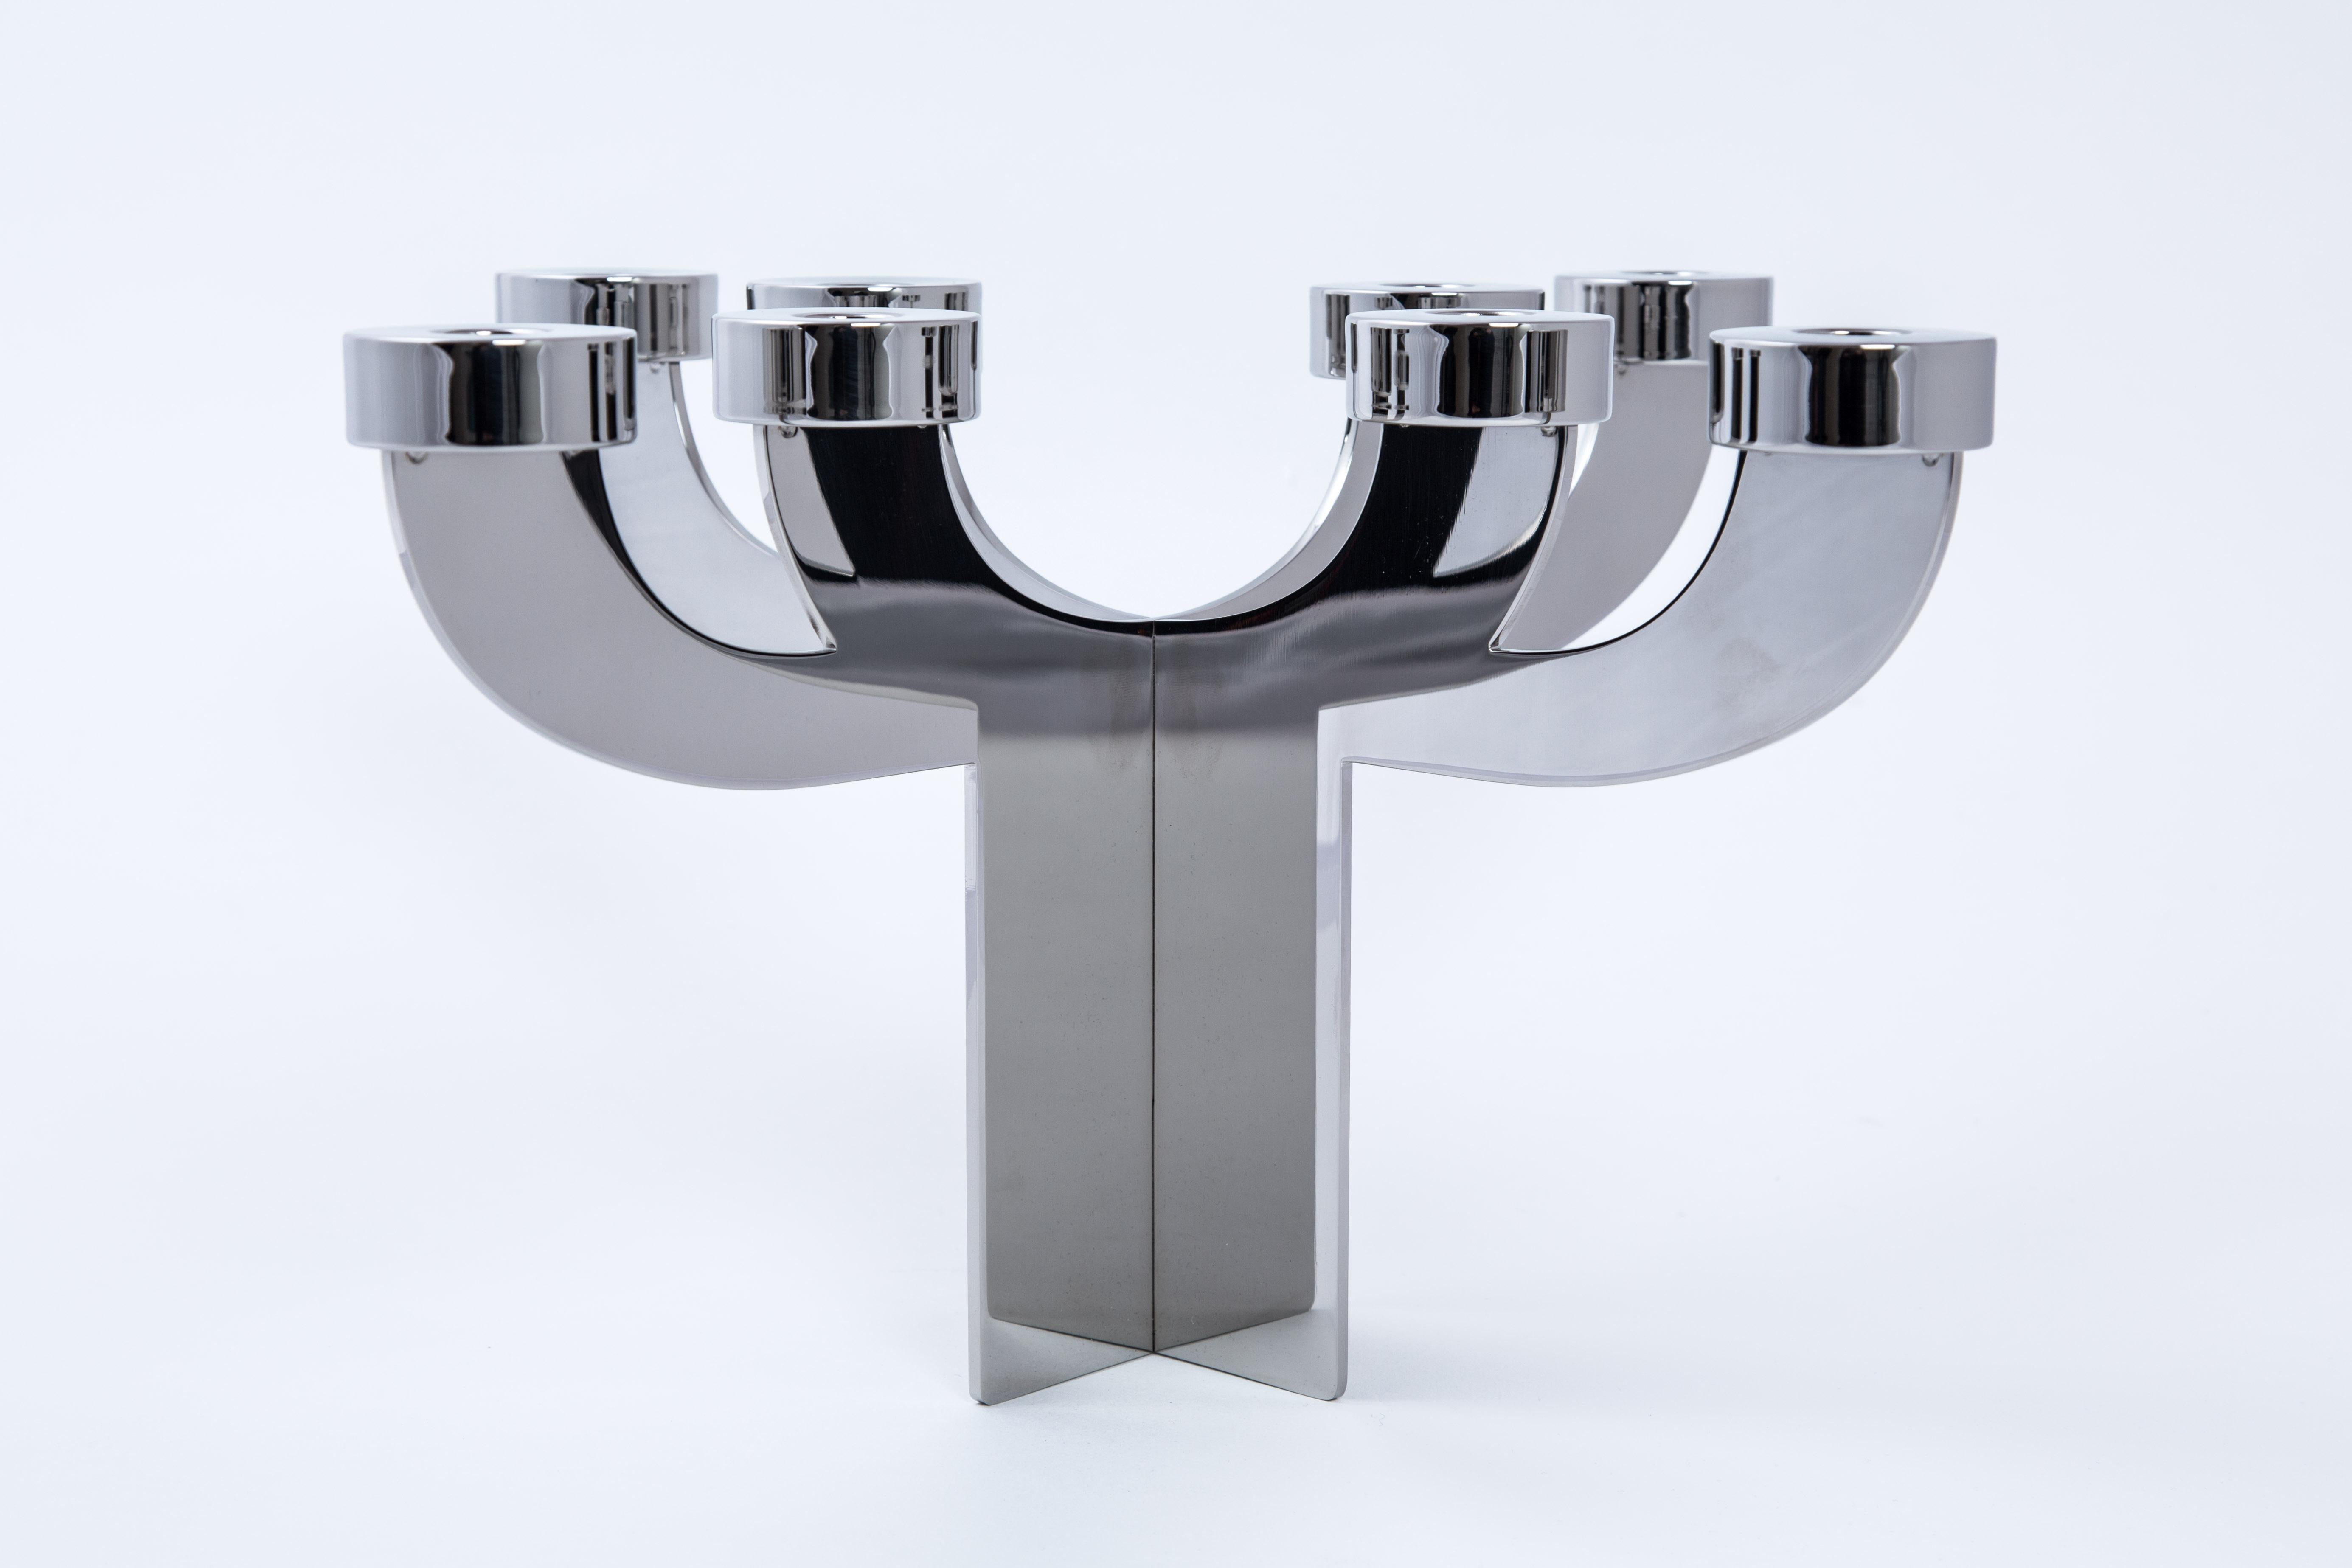 Stainless Steel Candelabra Designed by Grethe Meyer for George Jensen